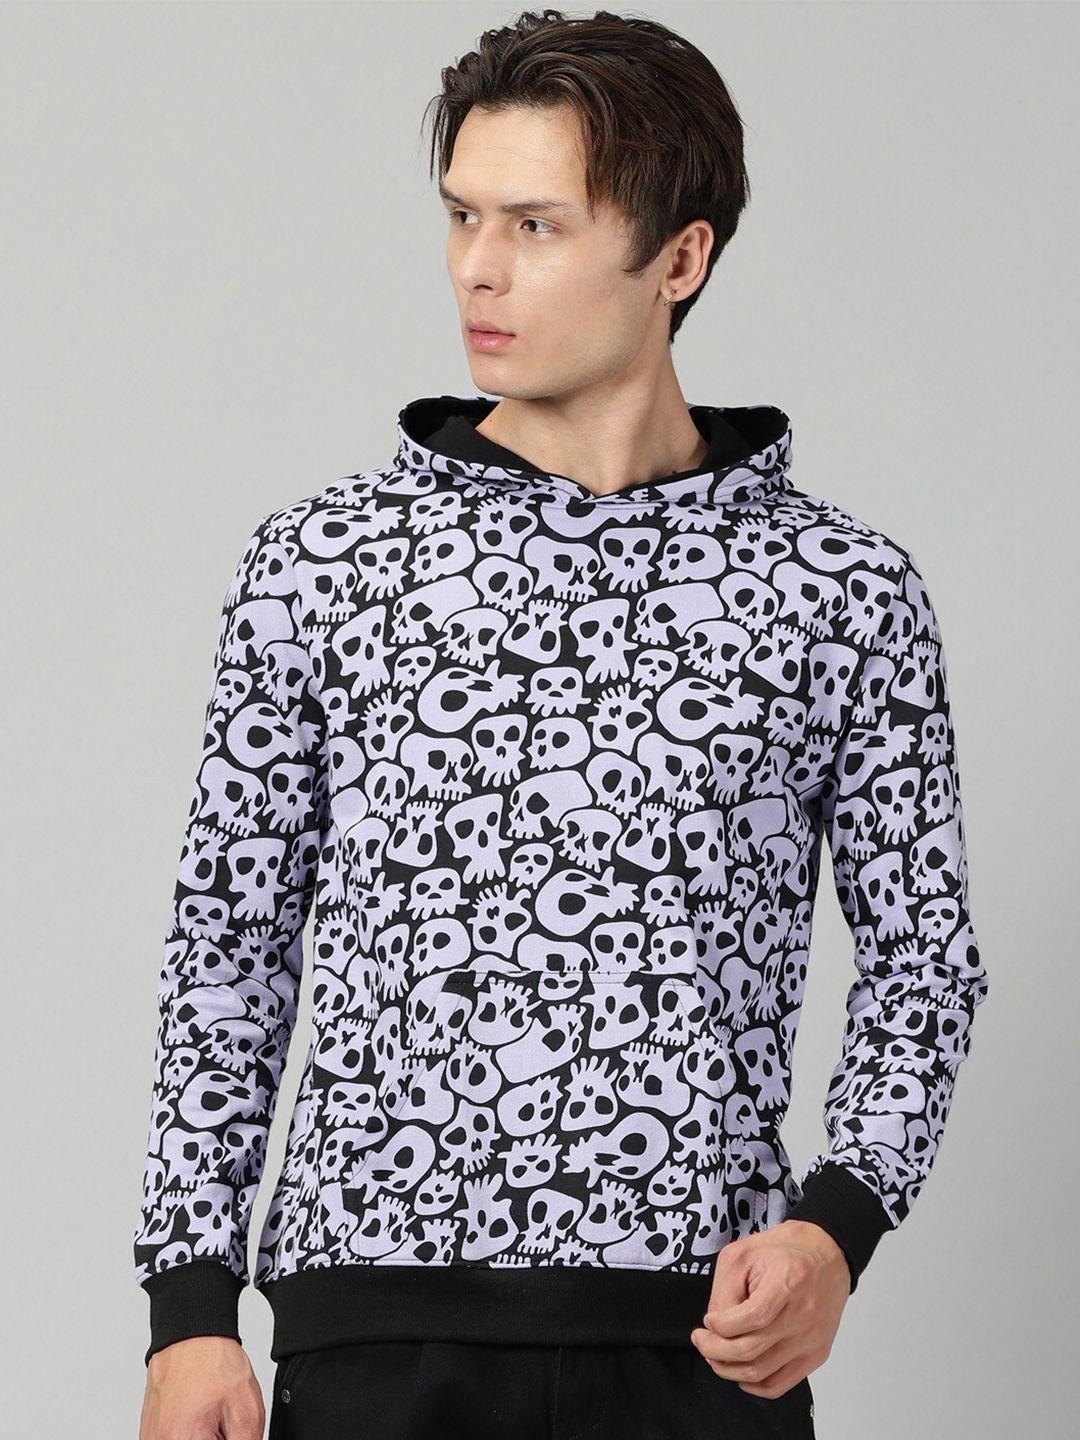 rodzen graphic printed hooded cotton pullover sweatshirt